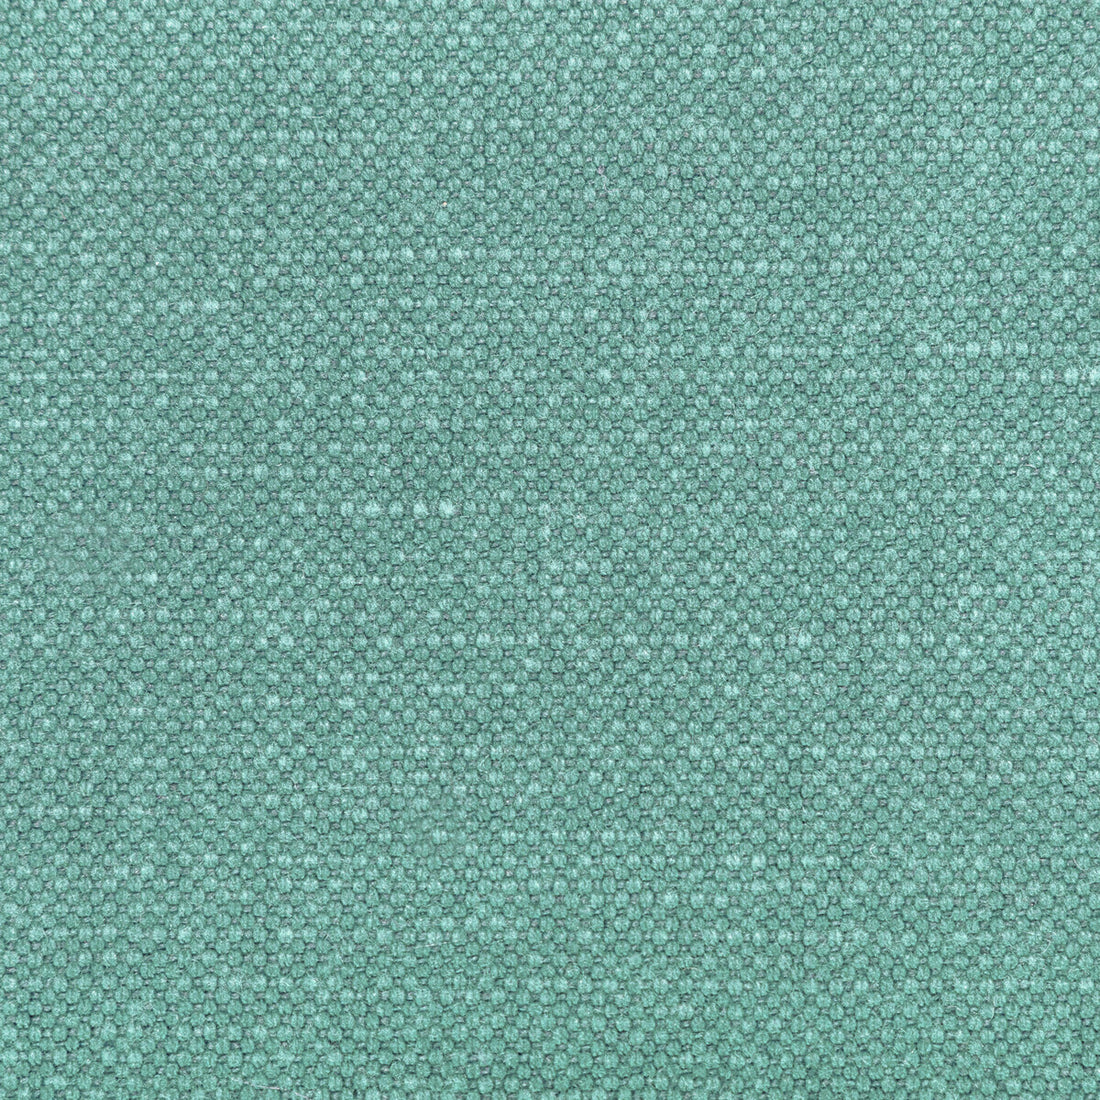 Carson fabric in spearmint color - pattern 36282.13.0 - by Kravet Basics